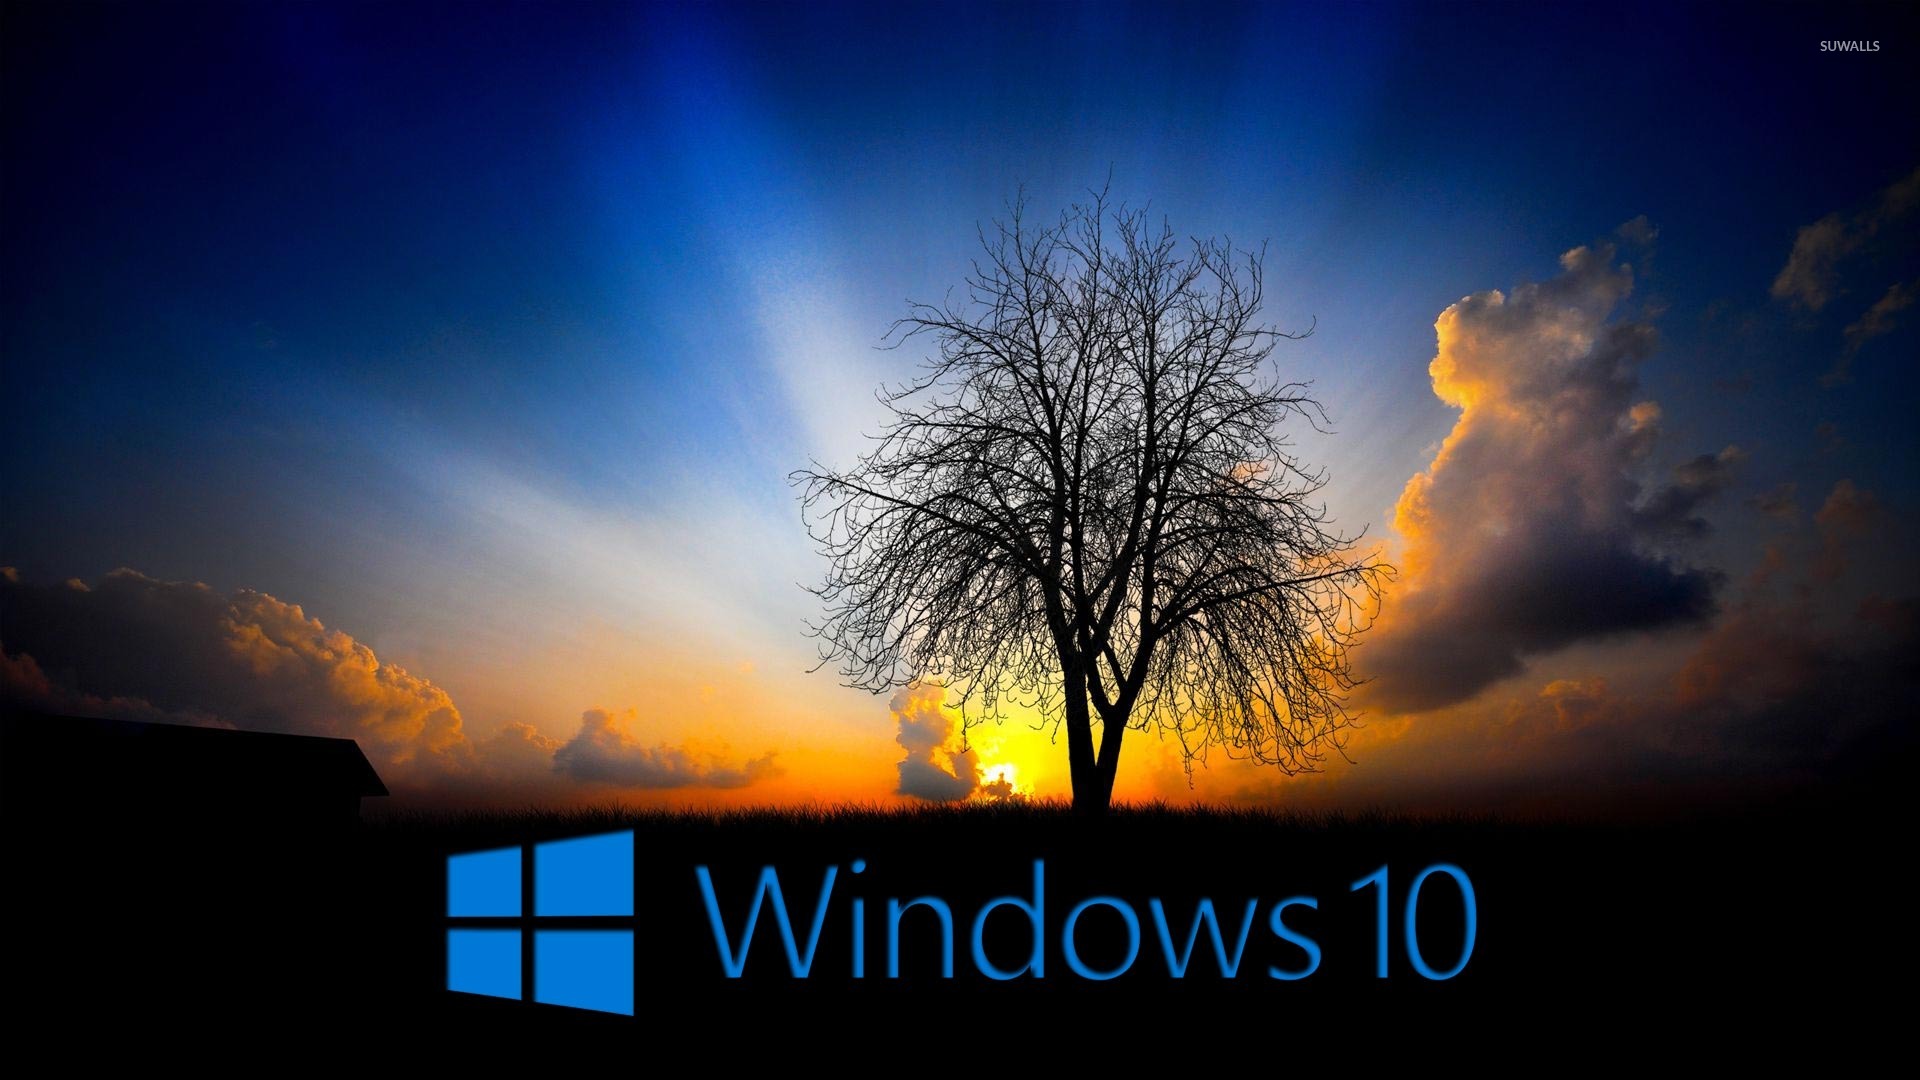 Windows 10 Wallpaper 1680x1050 - WallpaperSafari